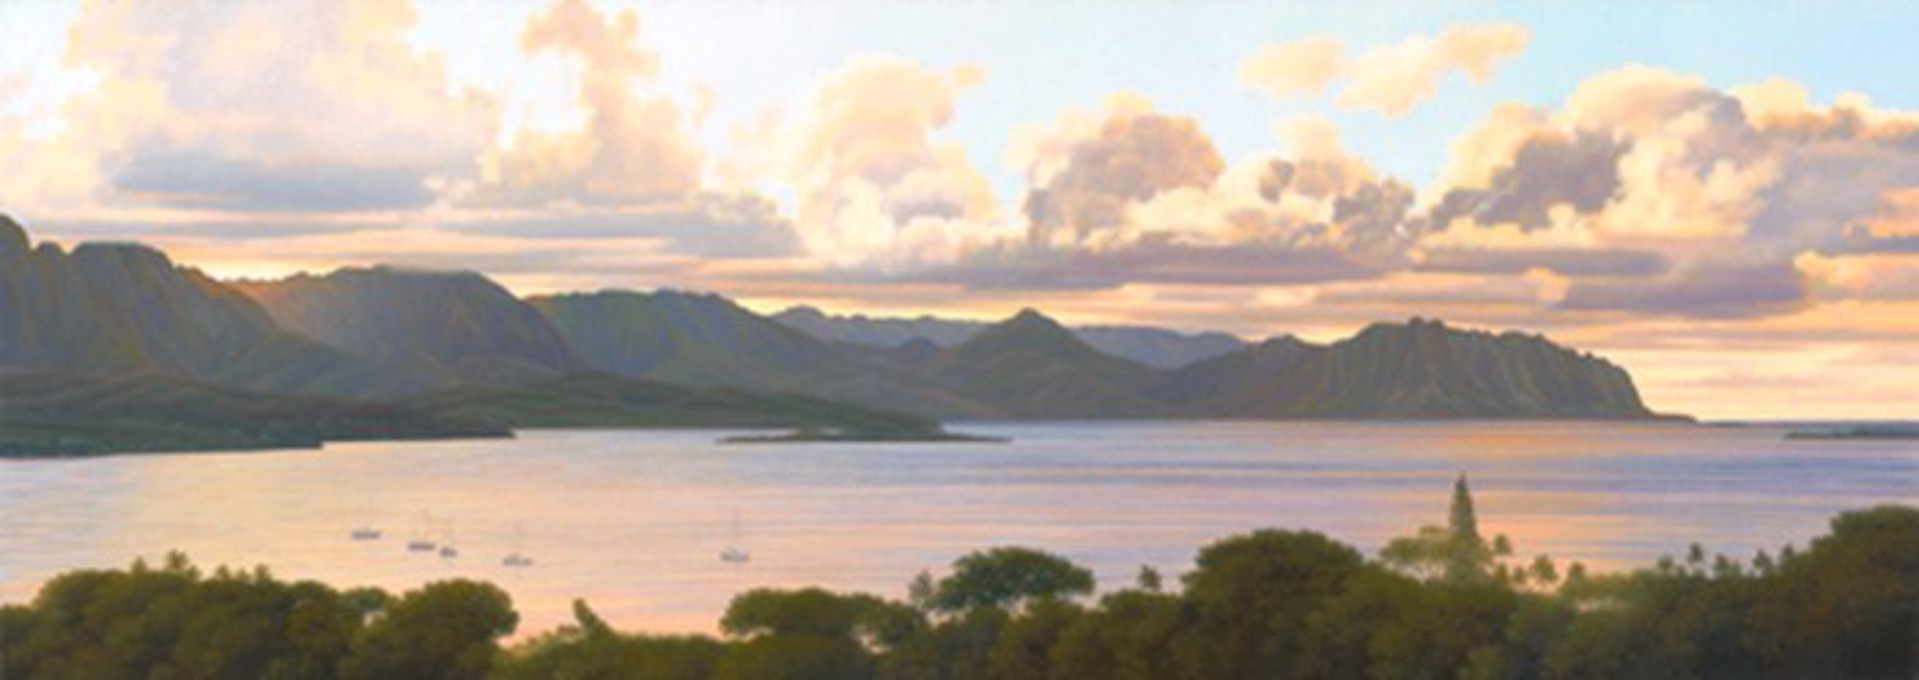 Kāneʻohe Bay by Gary Reed